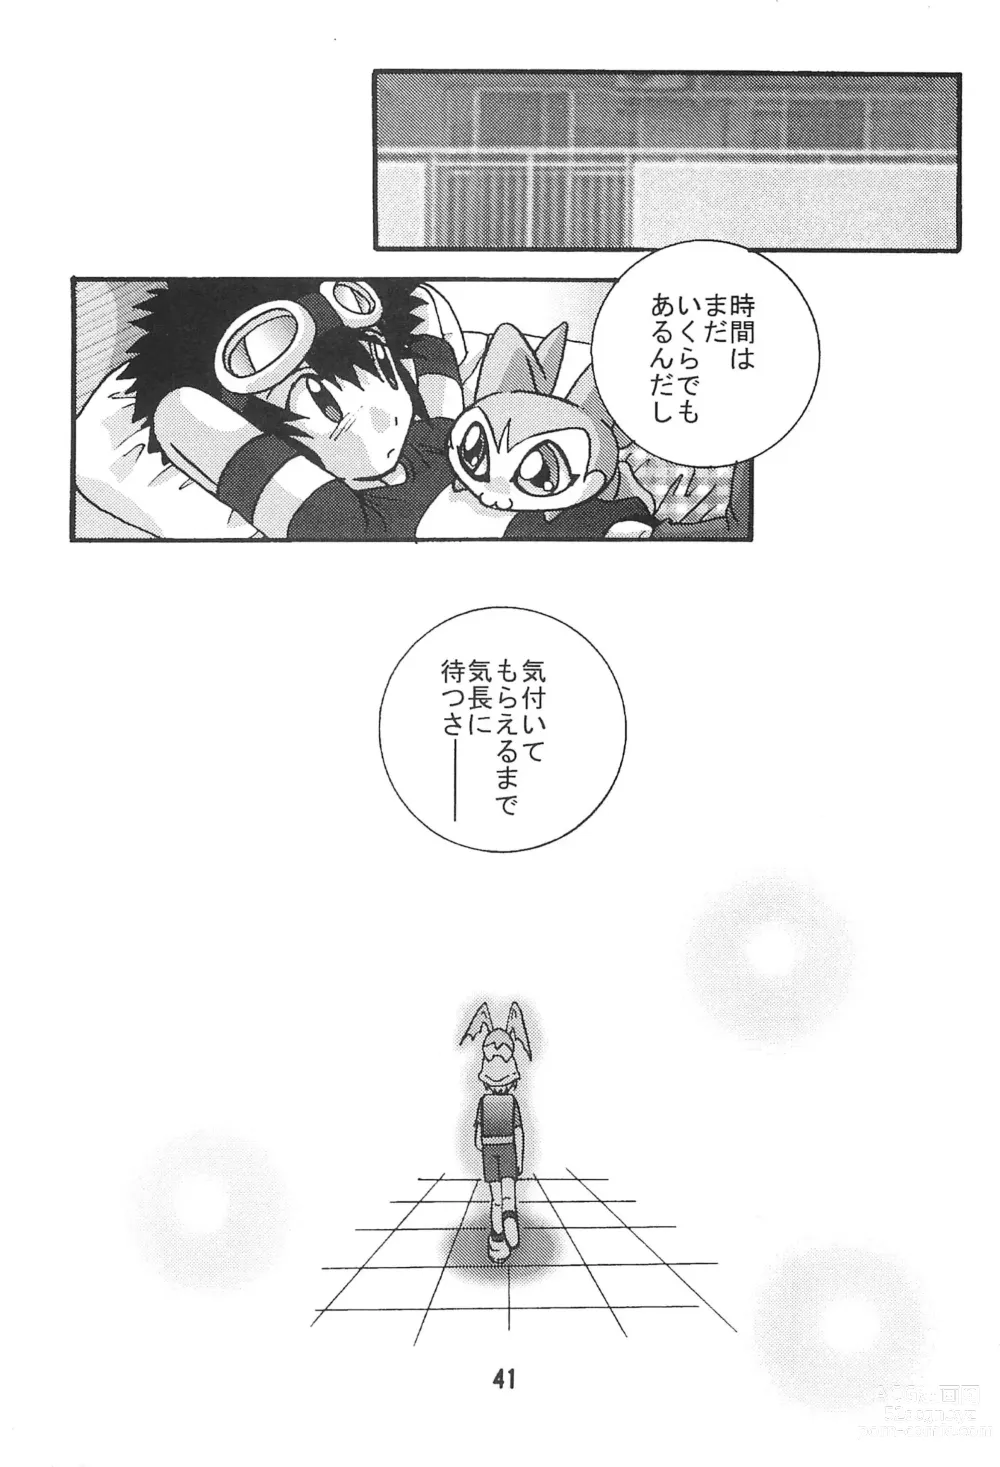 Page 41 of doujinshi SUBTLE RELATION